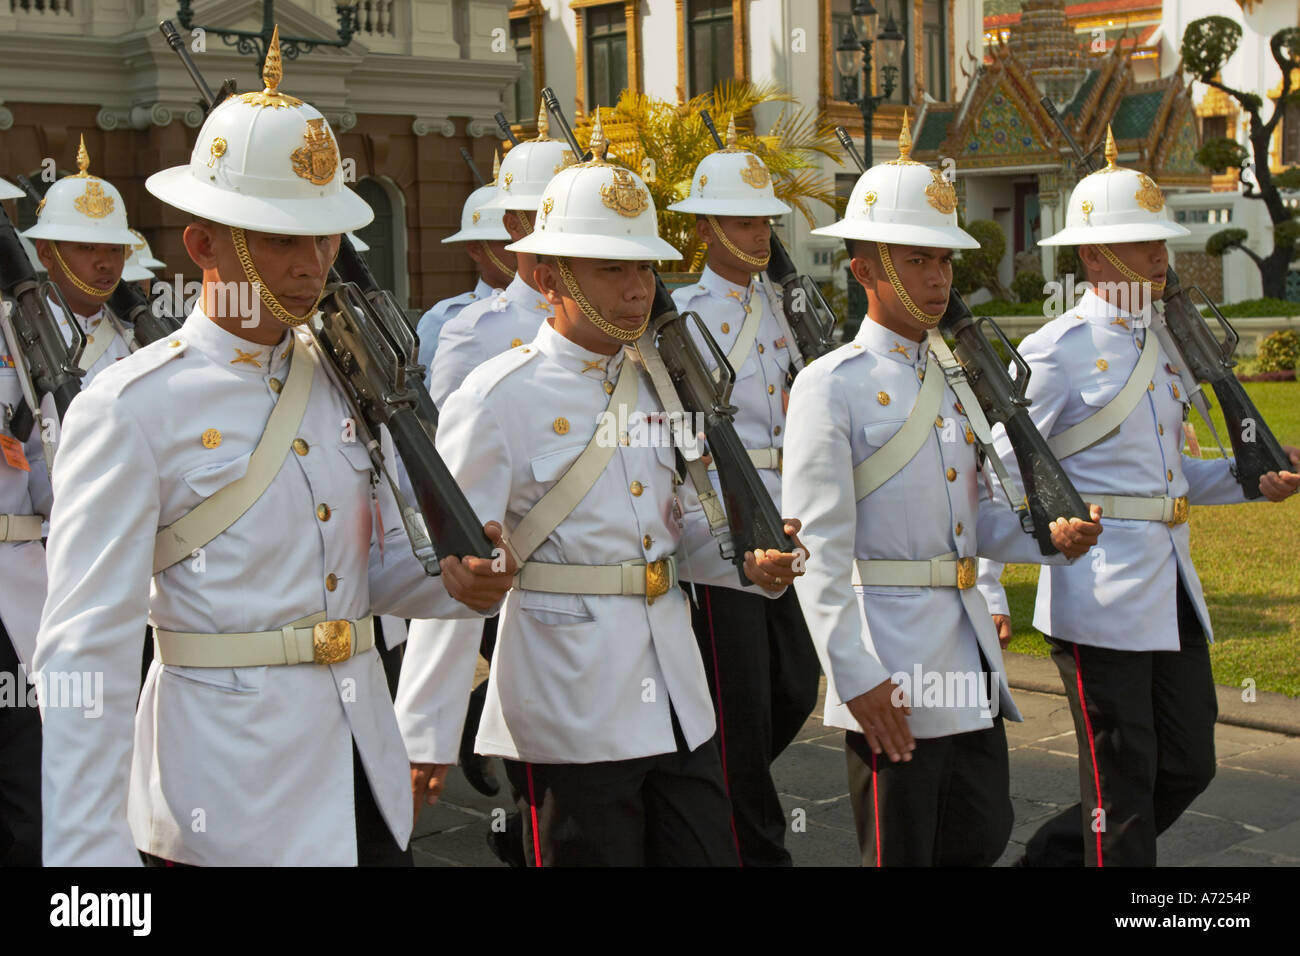 Guards of the Grand Palace. Bangkok, Thailand. Stock Photo